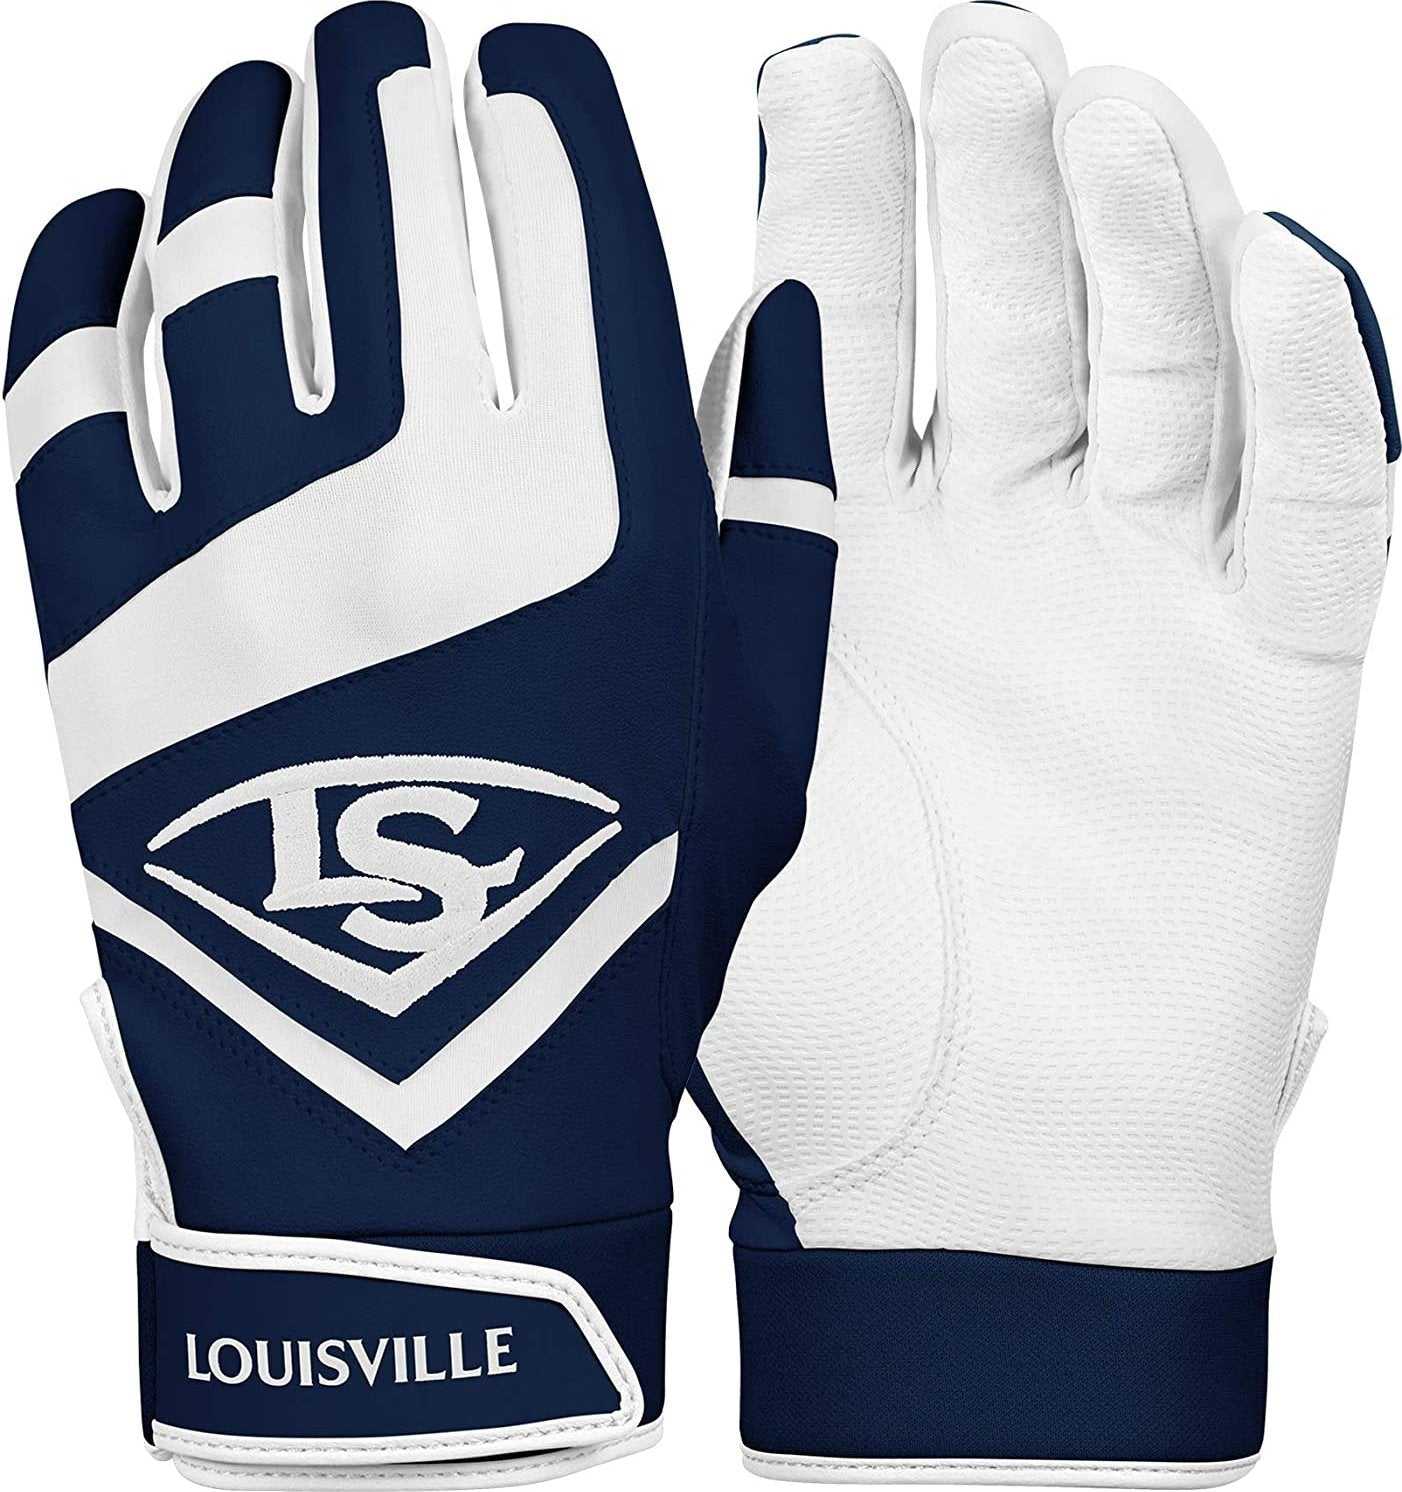 Louisville Slugger Genuine Batting Gloves - Navy - HIT A Double